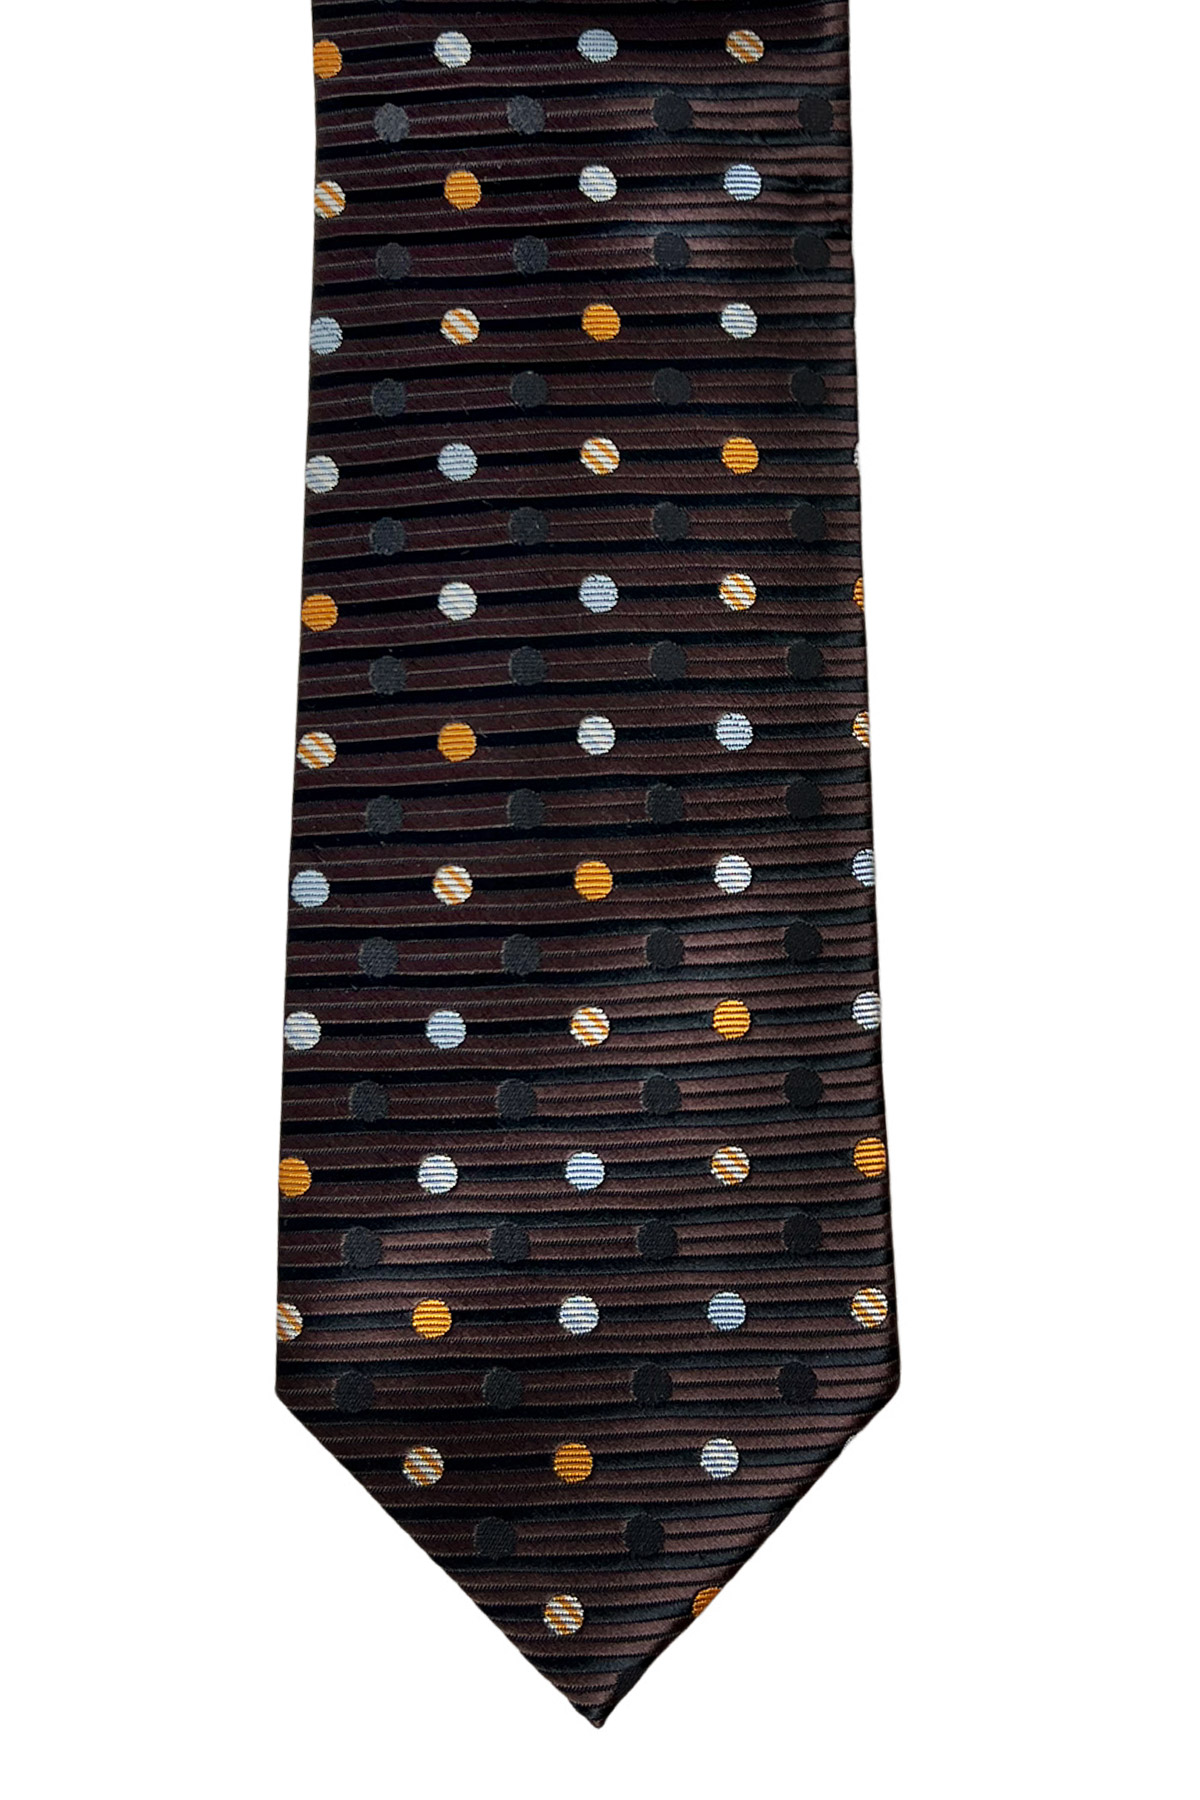 Cravatta uomo Marrone fantasia Pois multicolor 8cm da cerimonia elegante effetto seta